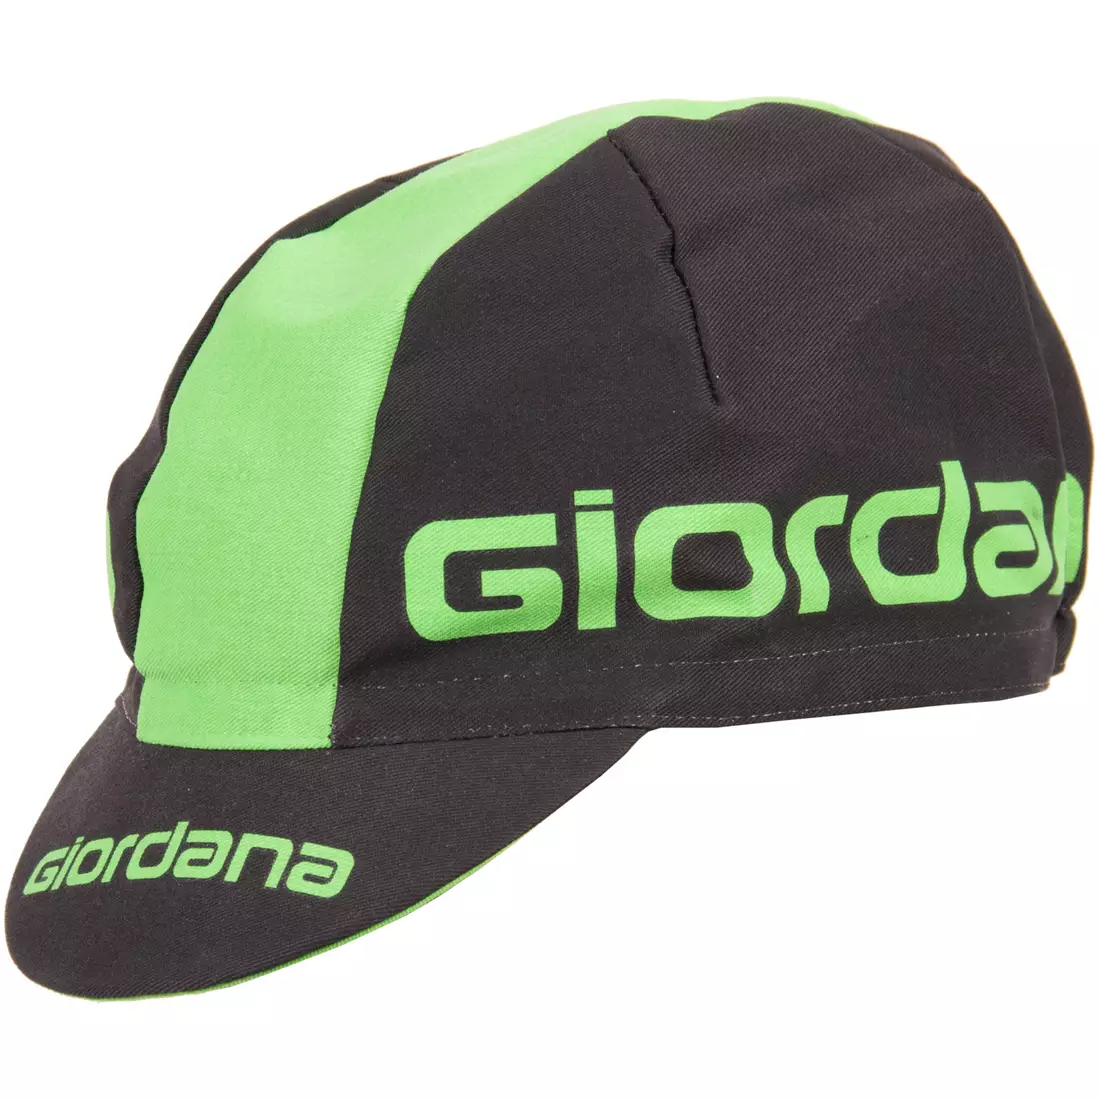 GIORDANA SS18 cycling cap - Giordana Logo - Black/Fluo Green GI-S5-COCA-GIOR-BKFL one size